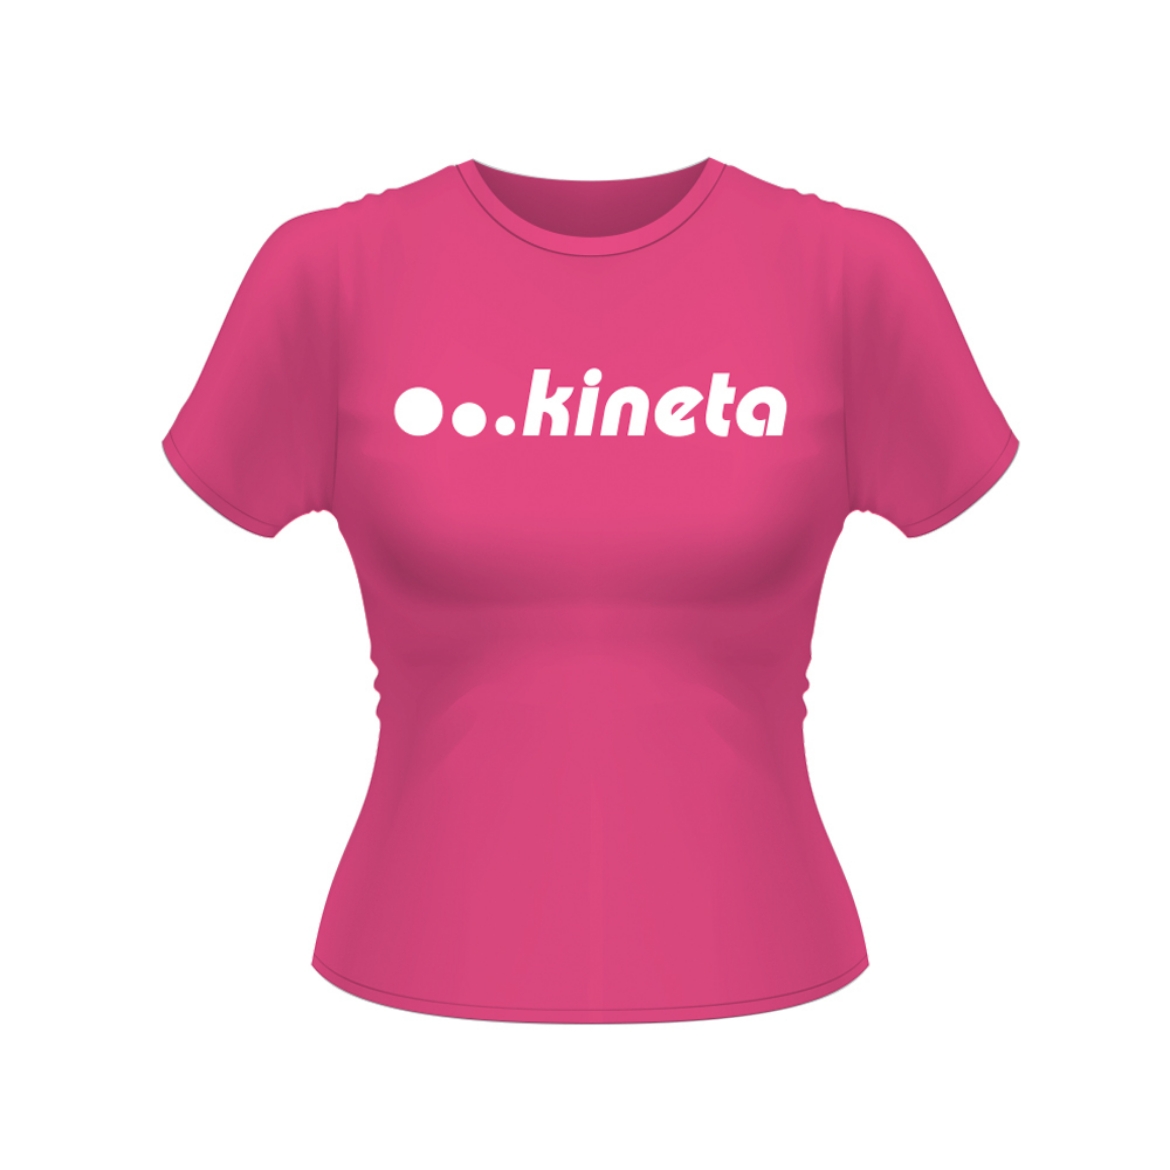 Slika od Kineta Girly Pink T-Shirt - Front logo